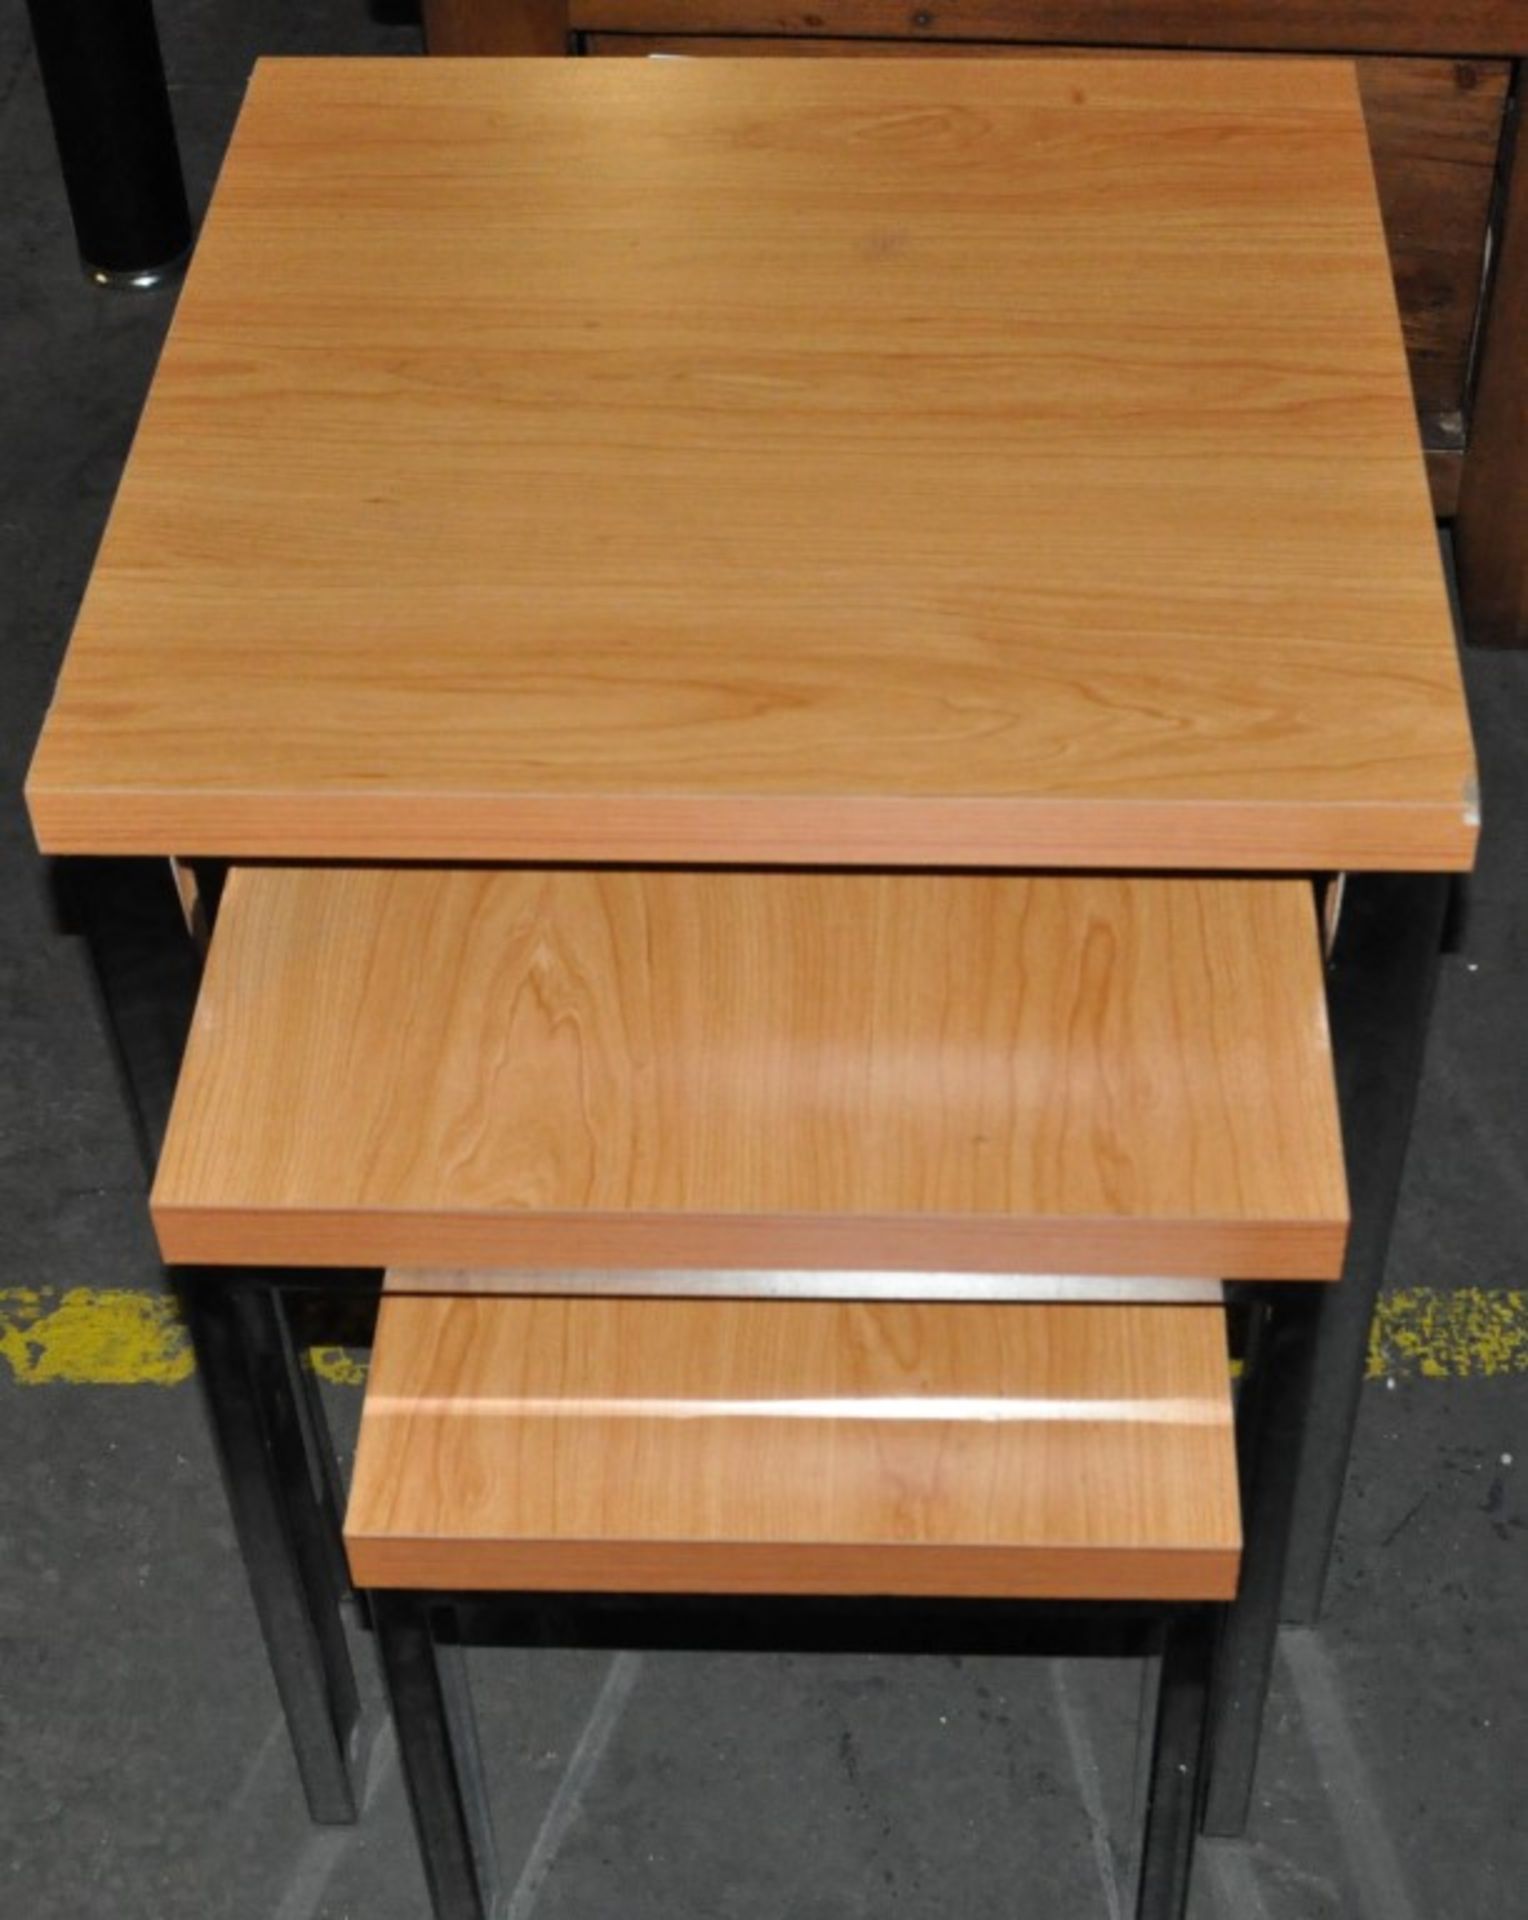 1 x Nest of 3 Tables – Small Medium & Large – Ex Display – Dimensions : Large 50x50x50cm , Medium - Image 2 of 3